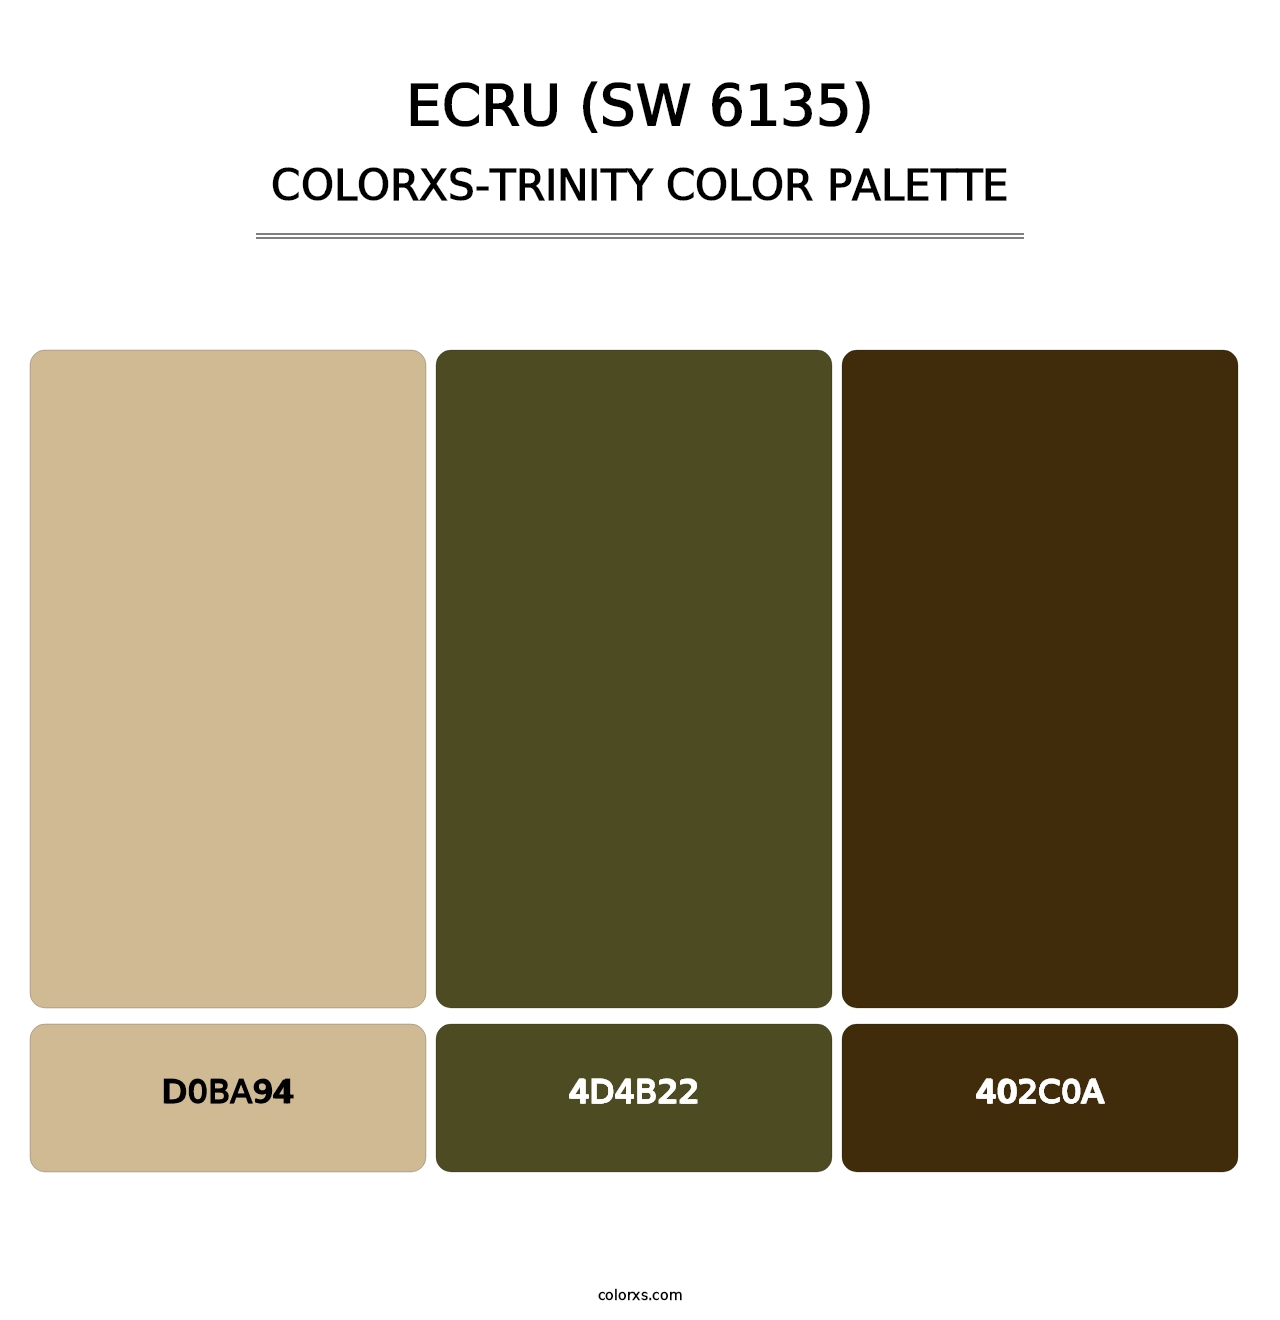 Ecru (SW 6135) - Colorxs Trinity Palette